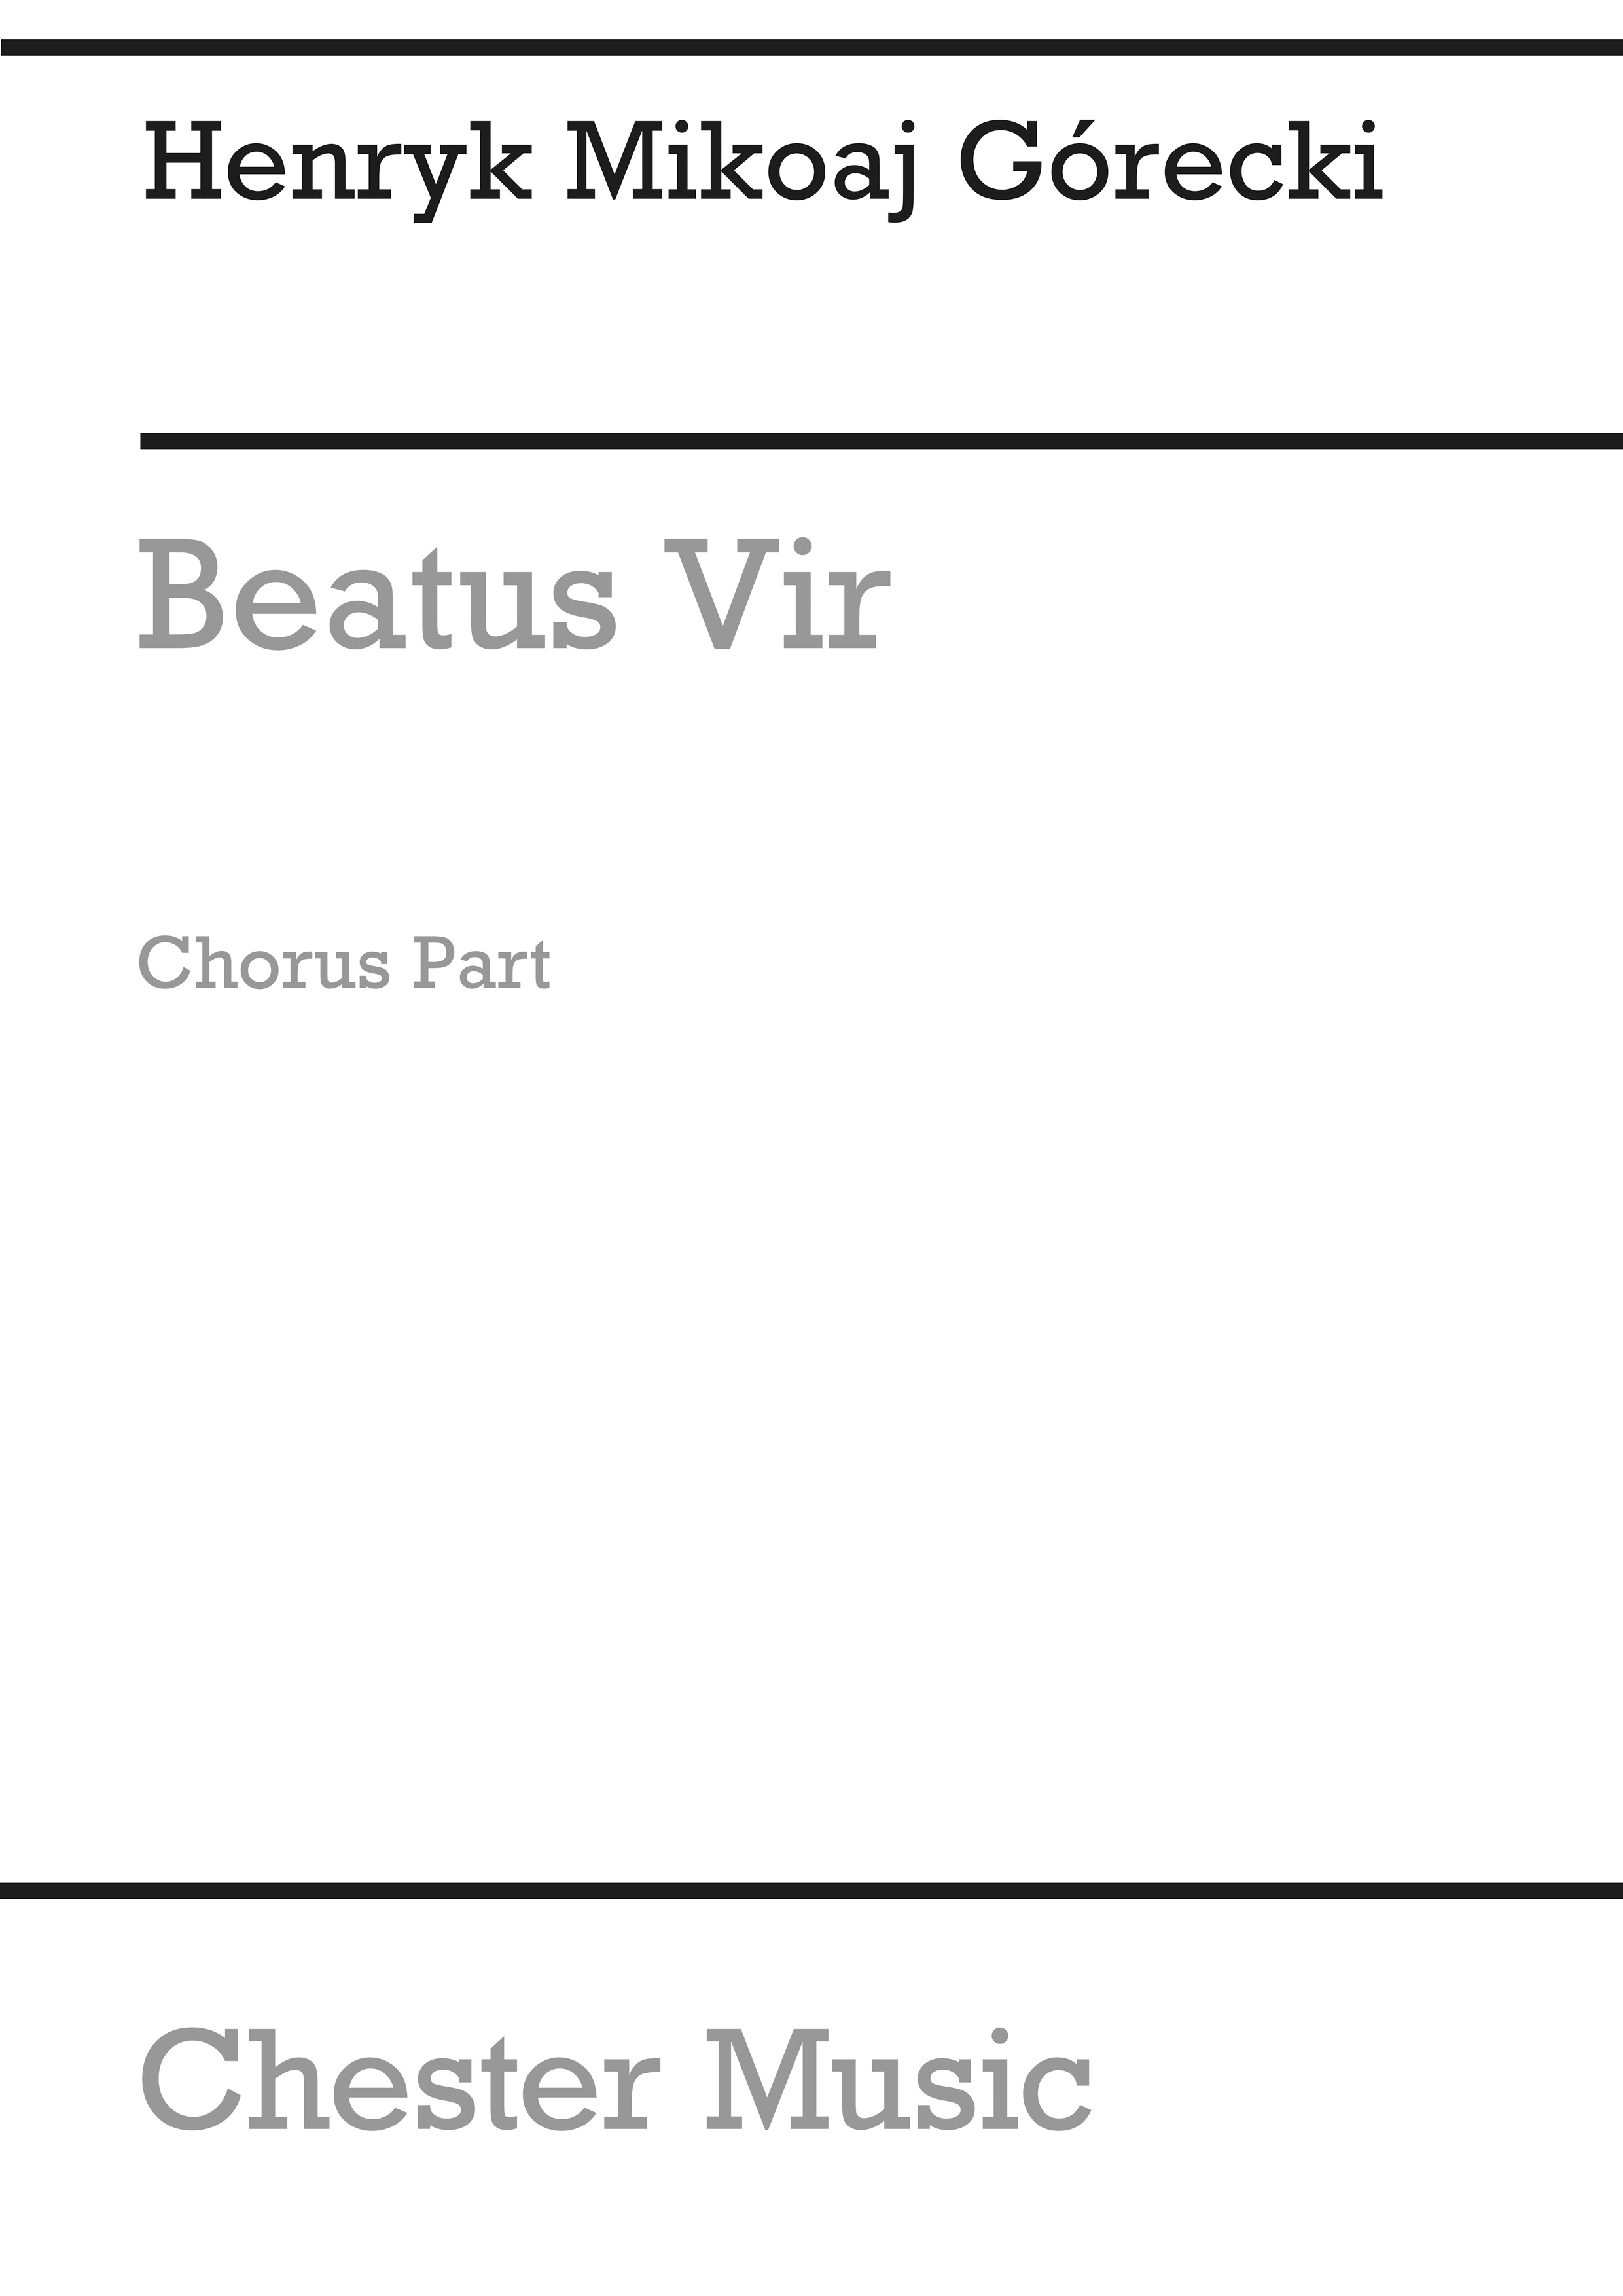 Henryk Mikolaj Grecki: Beatus Vir (Chorus Part): SATB: Vocal Score